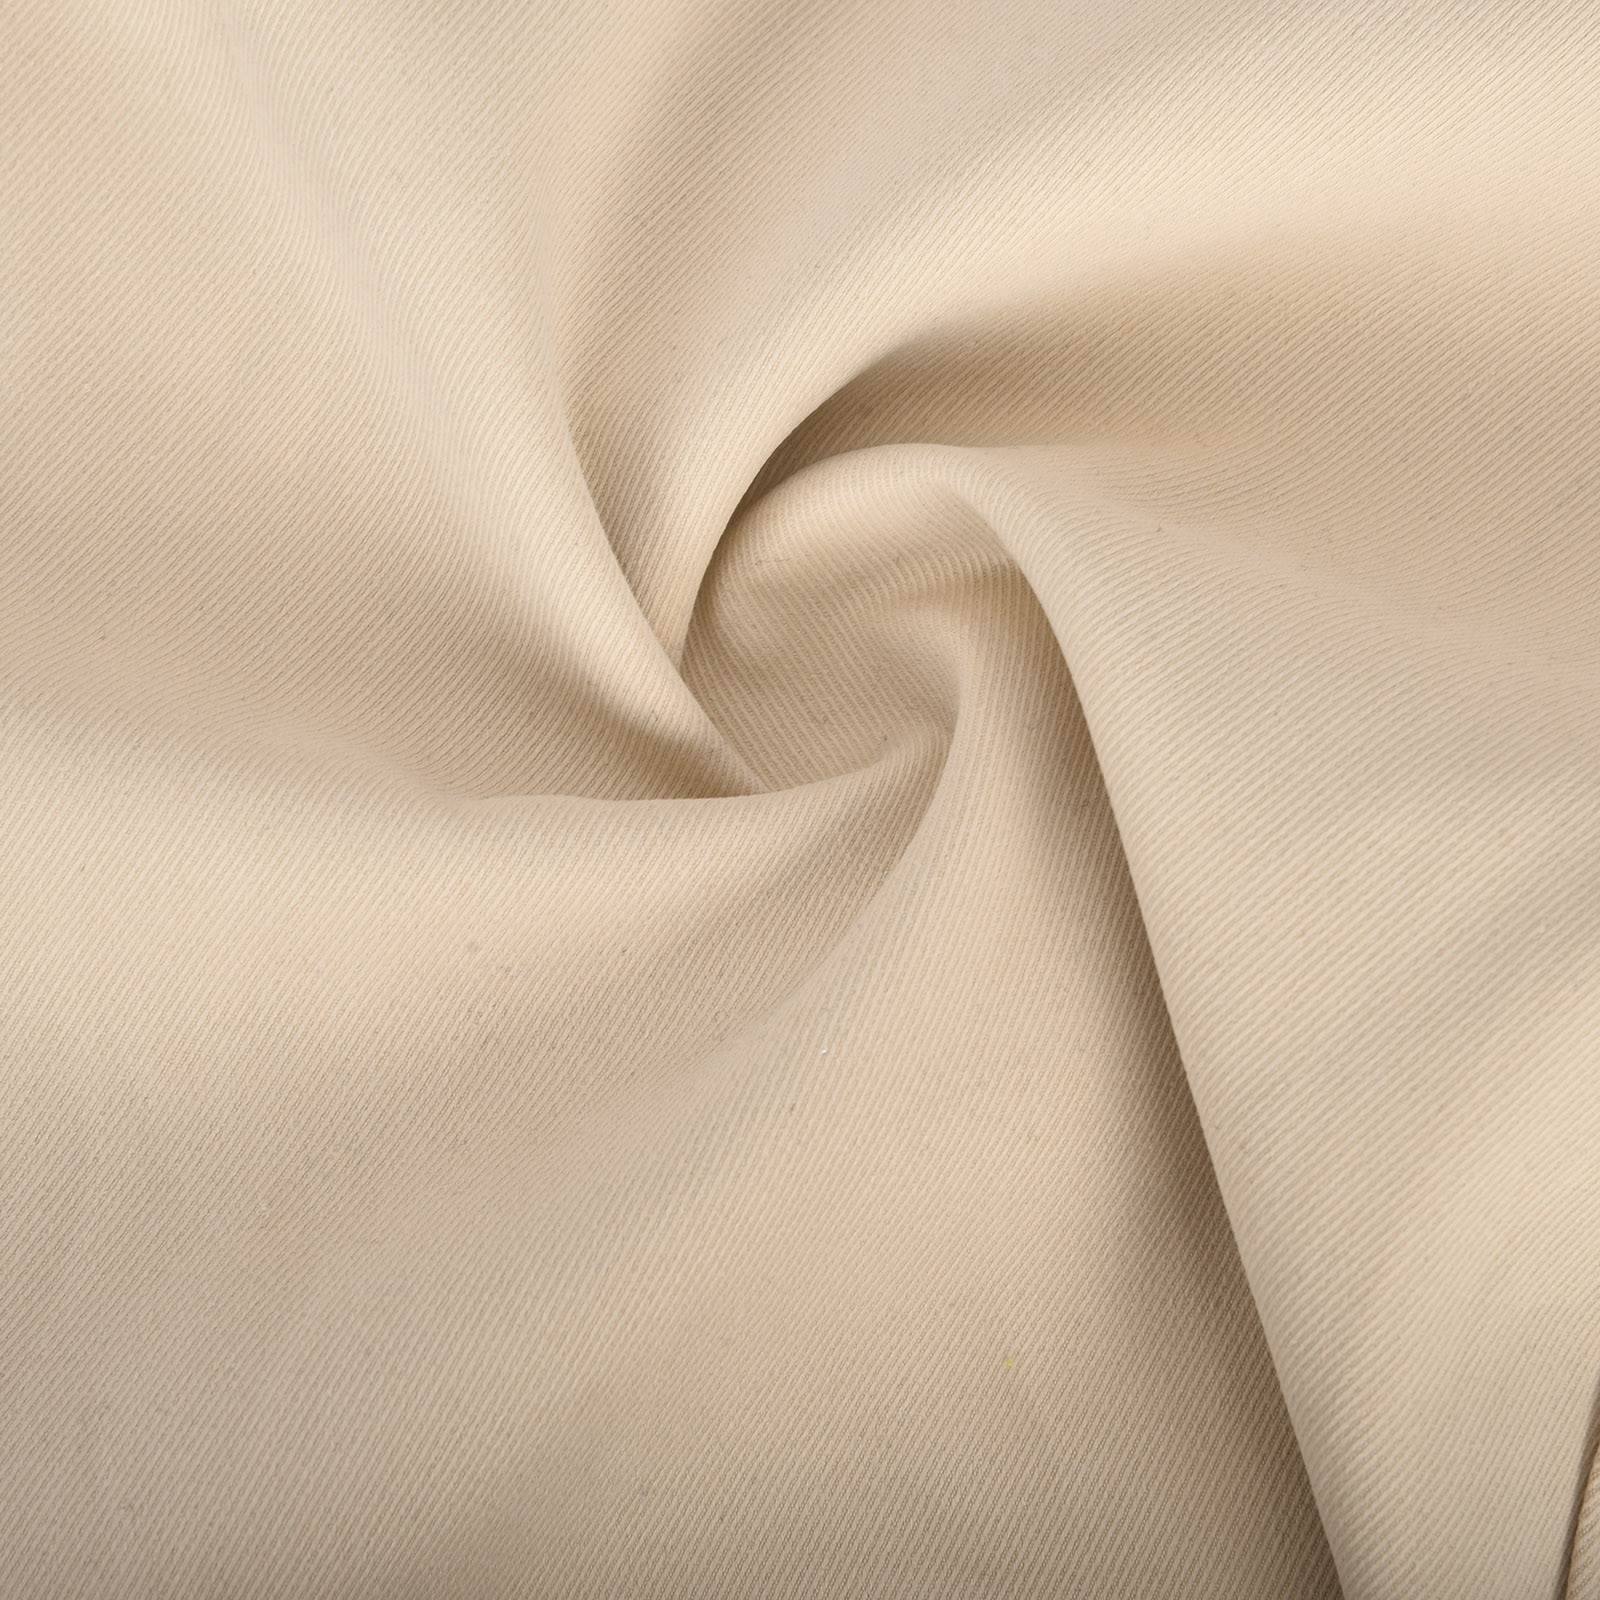 Tdoqot Chinos Pants Men- Cotton Drawstring Comftable Elastic Waist Slim Casual Mens Pants Beige - image 4 of 6